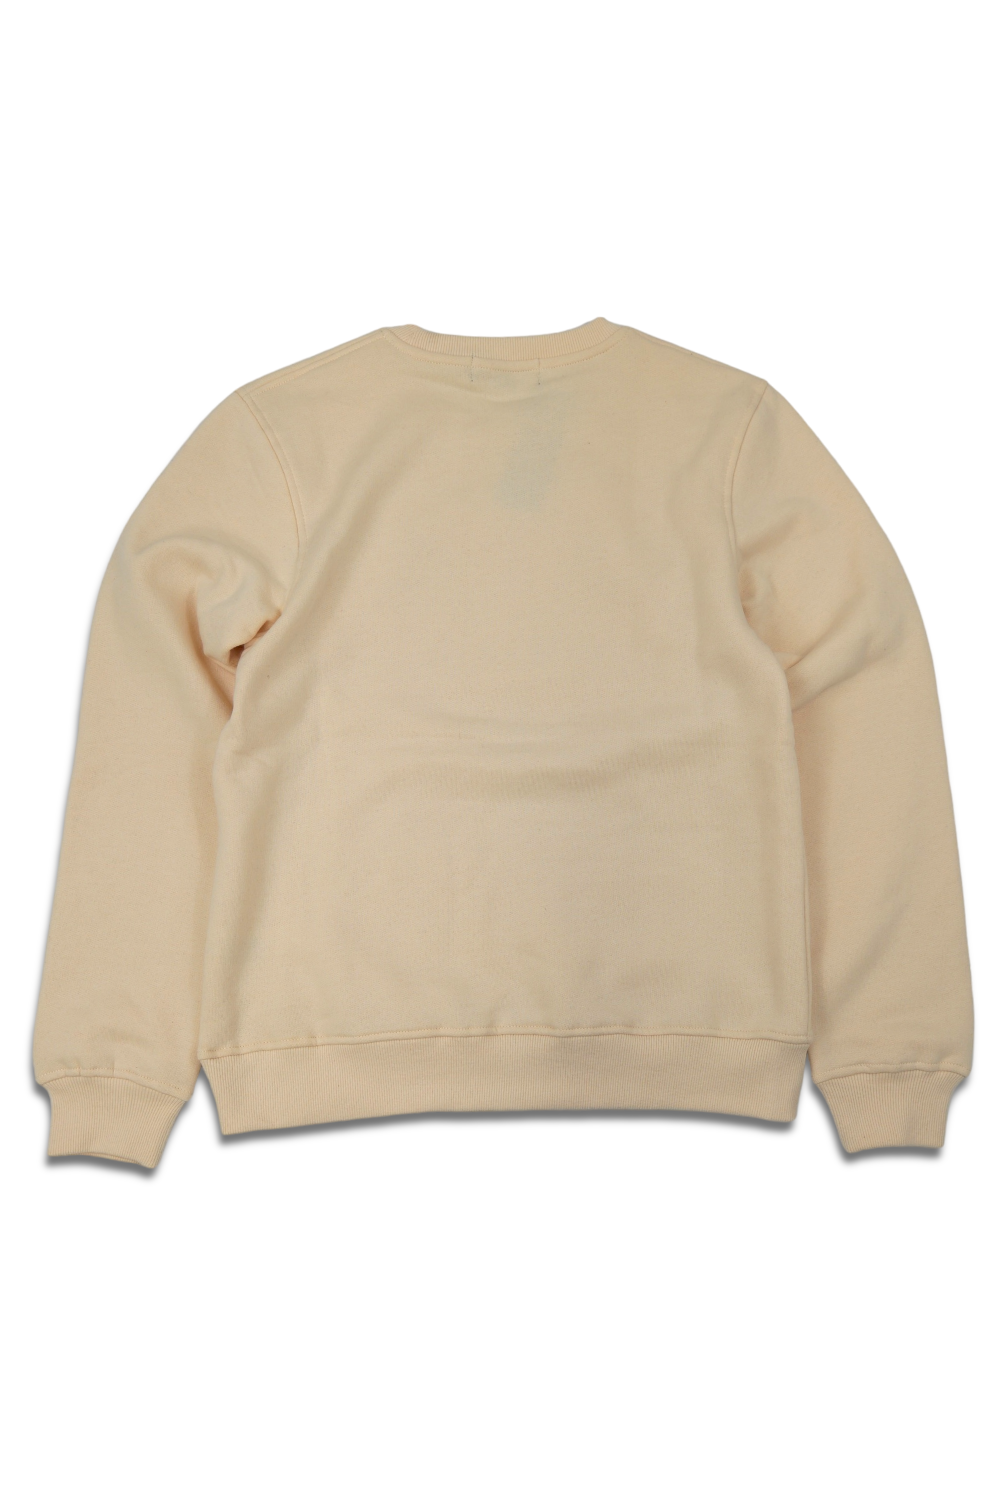 Graphic Crew Neck Sweater - 3Forty - Cream